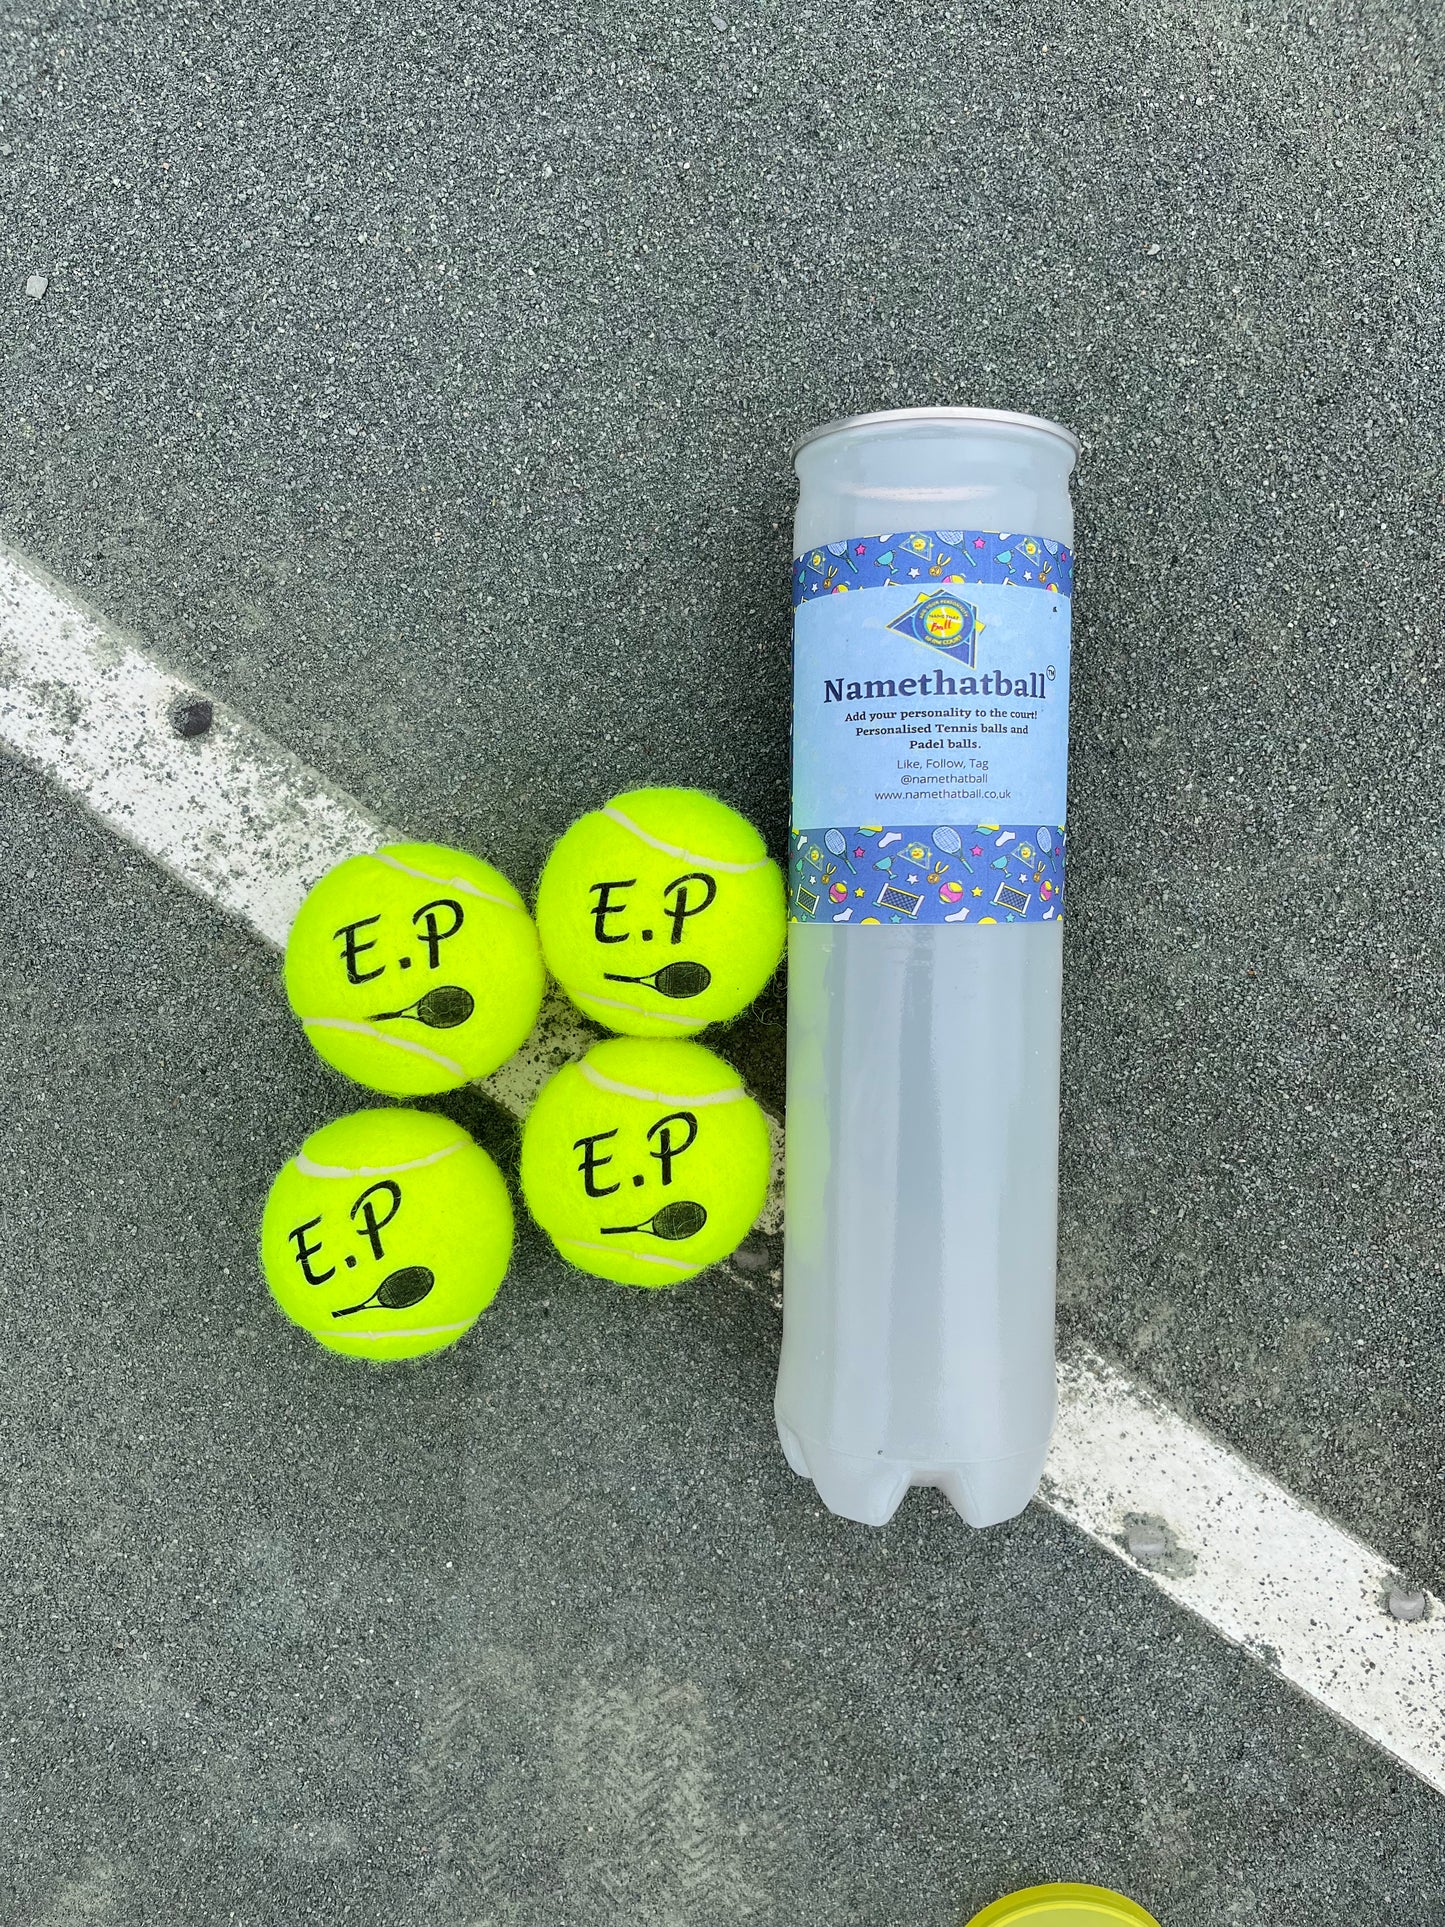 NTB - Personalised Adult tennis balls - Name & Racket